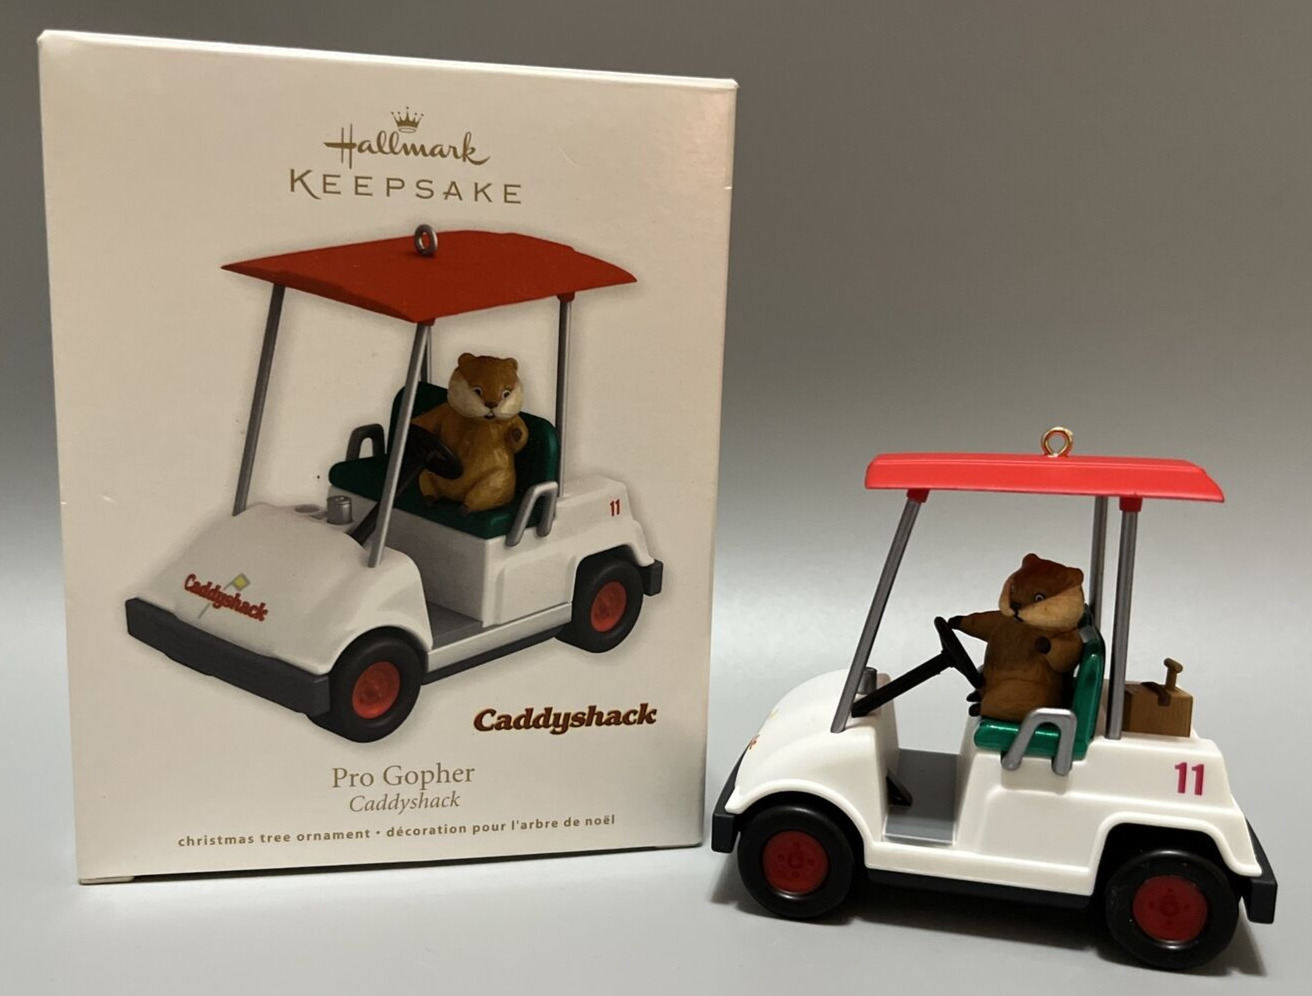 Hallmark Keepsake Pro Gopher CaddyShack Golf Cart Christmas Ornament 2011